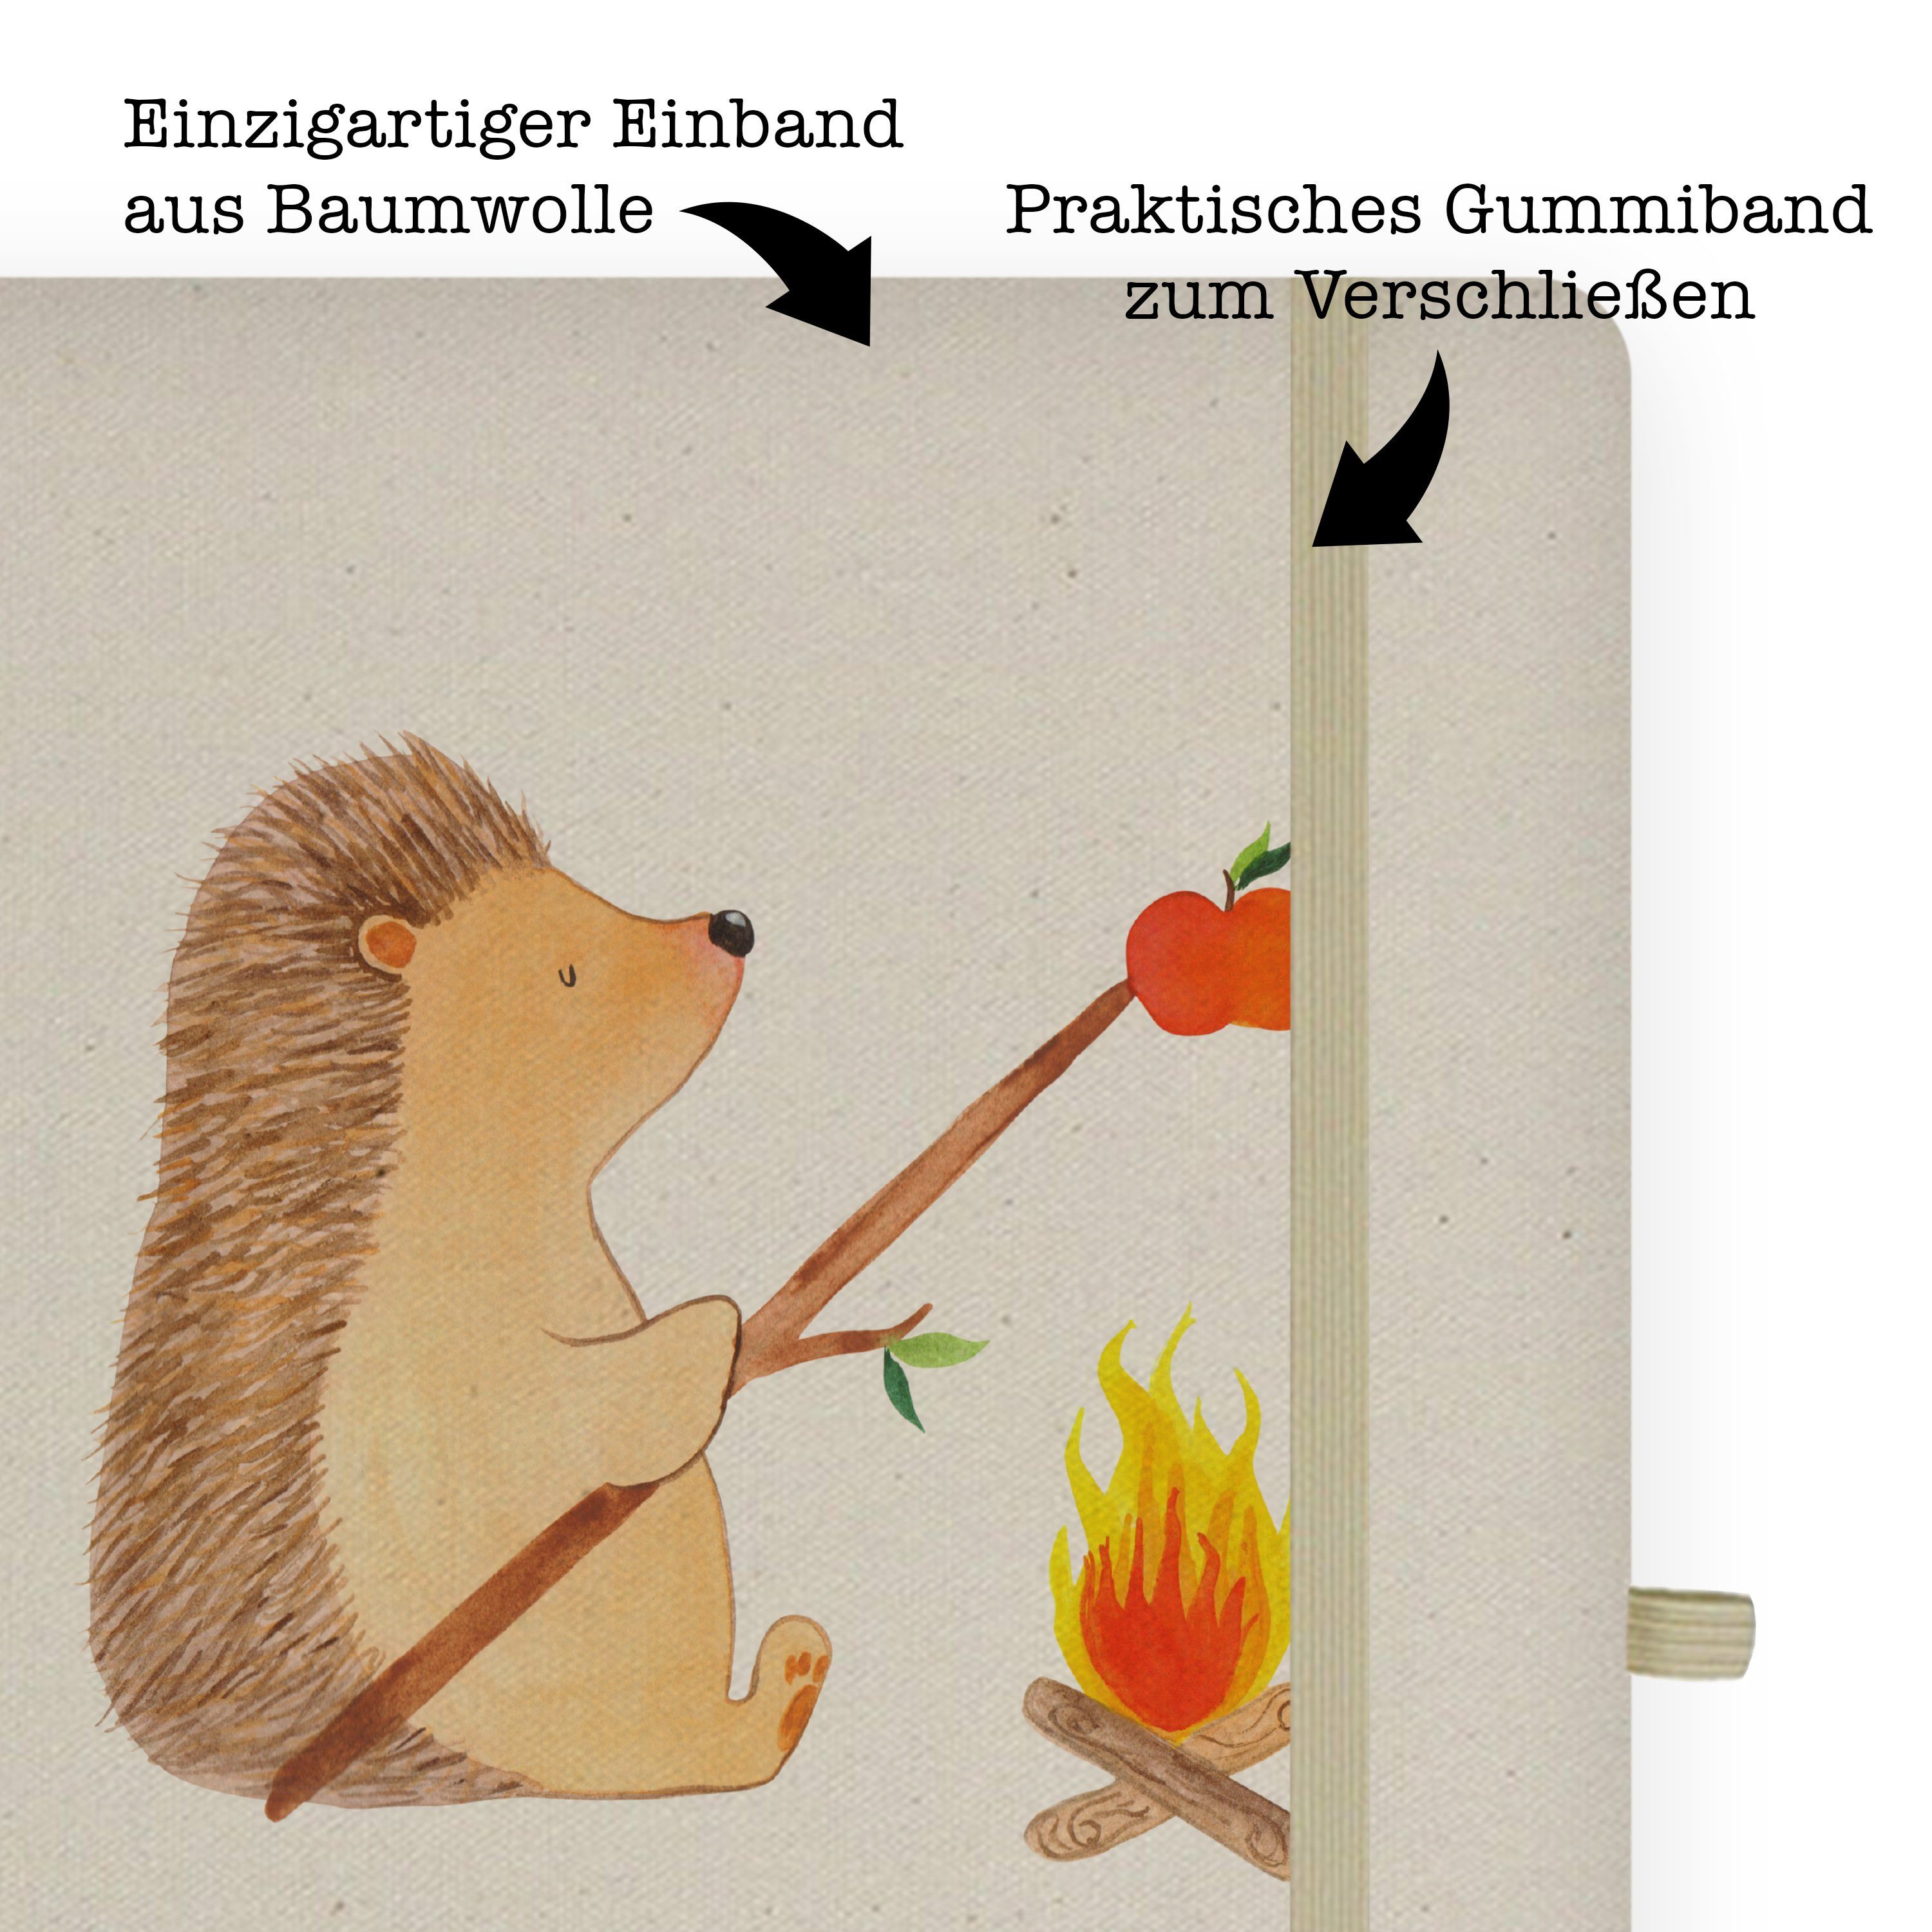 Mr. & Mrs. Panda - Laune, Transparent Gute Geschenk, - Grillen, Adressbuch grillt Igel Notizbuch